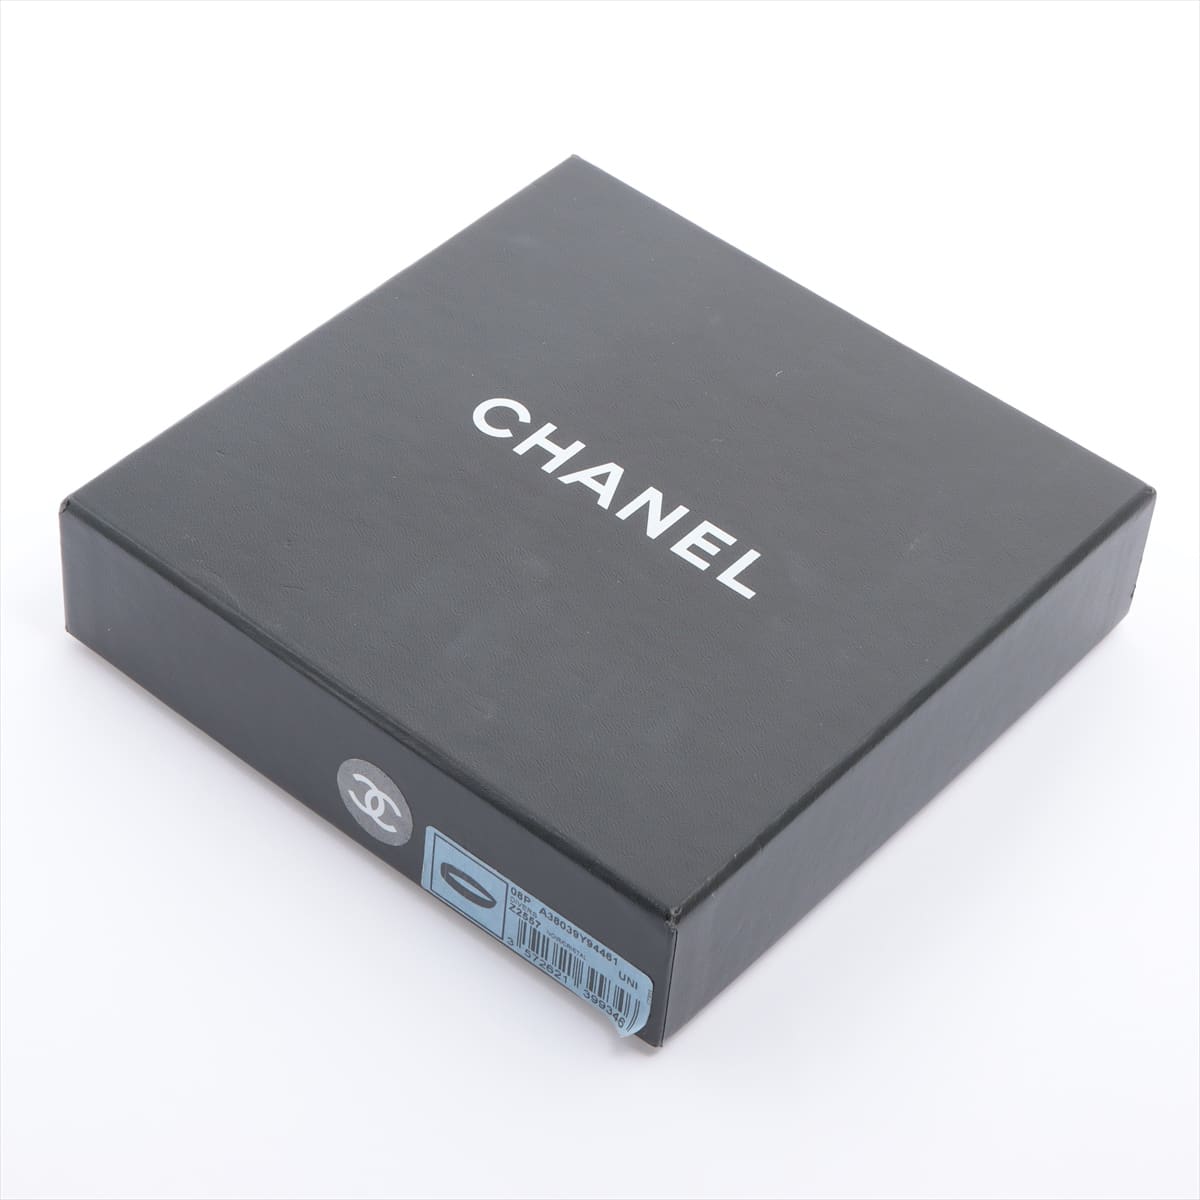 Chanel Camelia Headband Satin Black×Gold